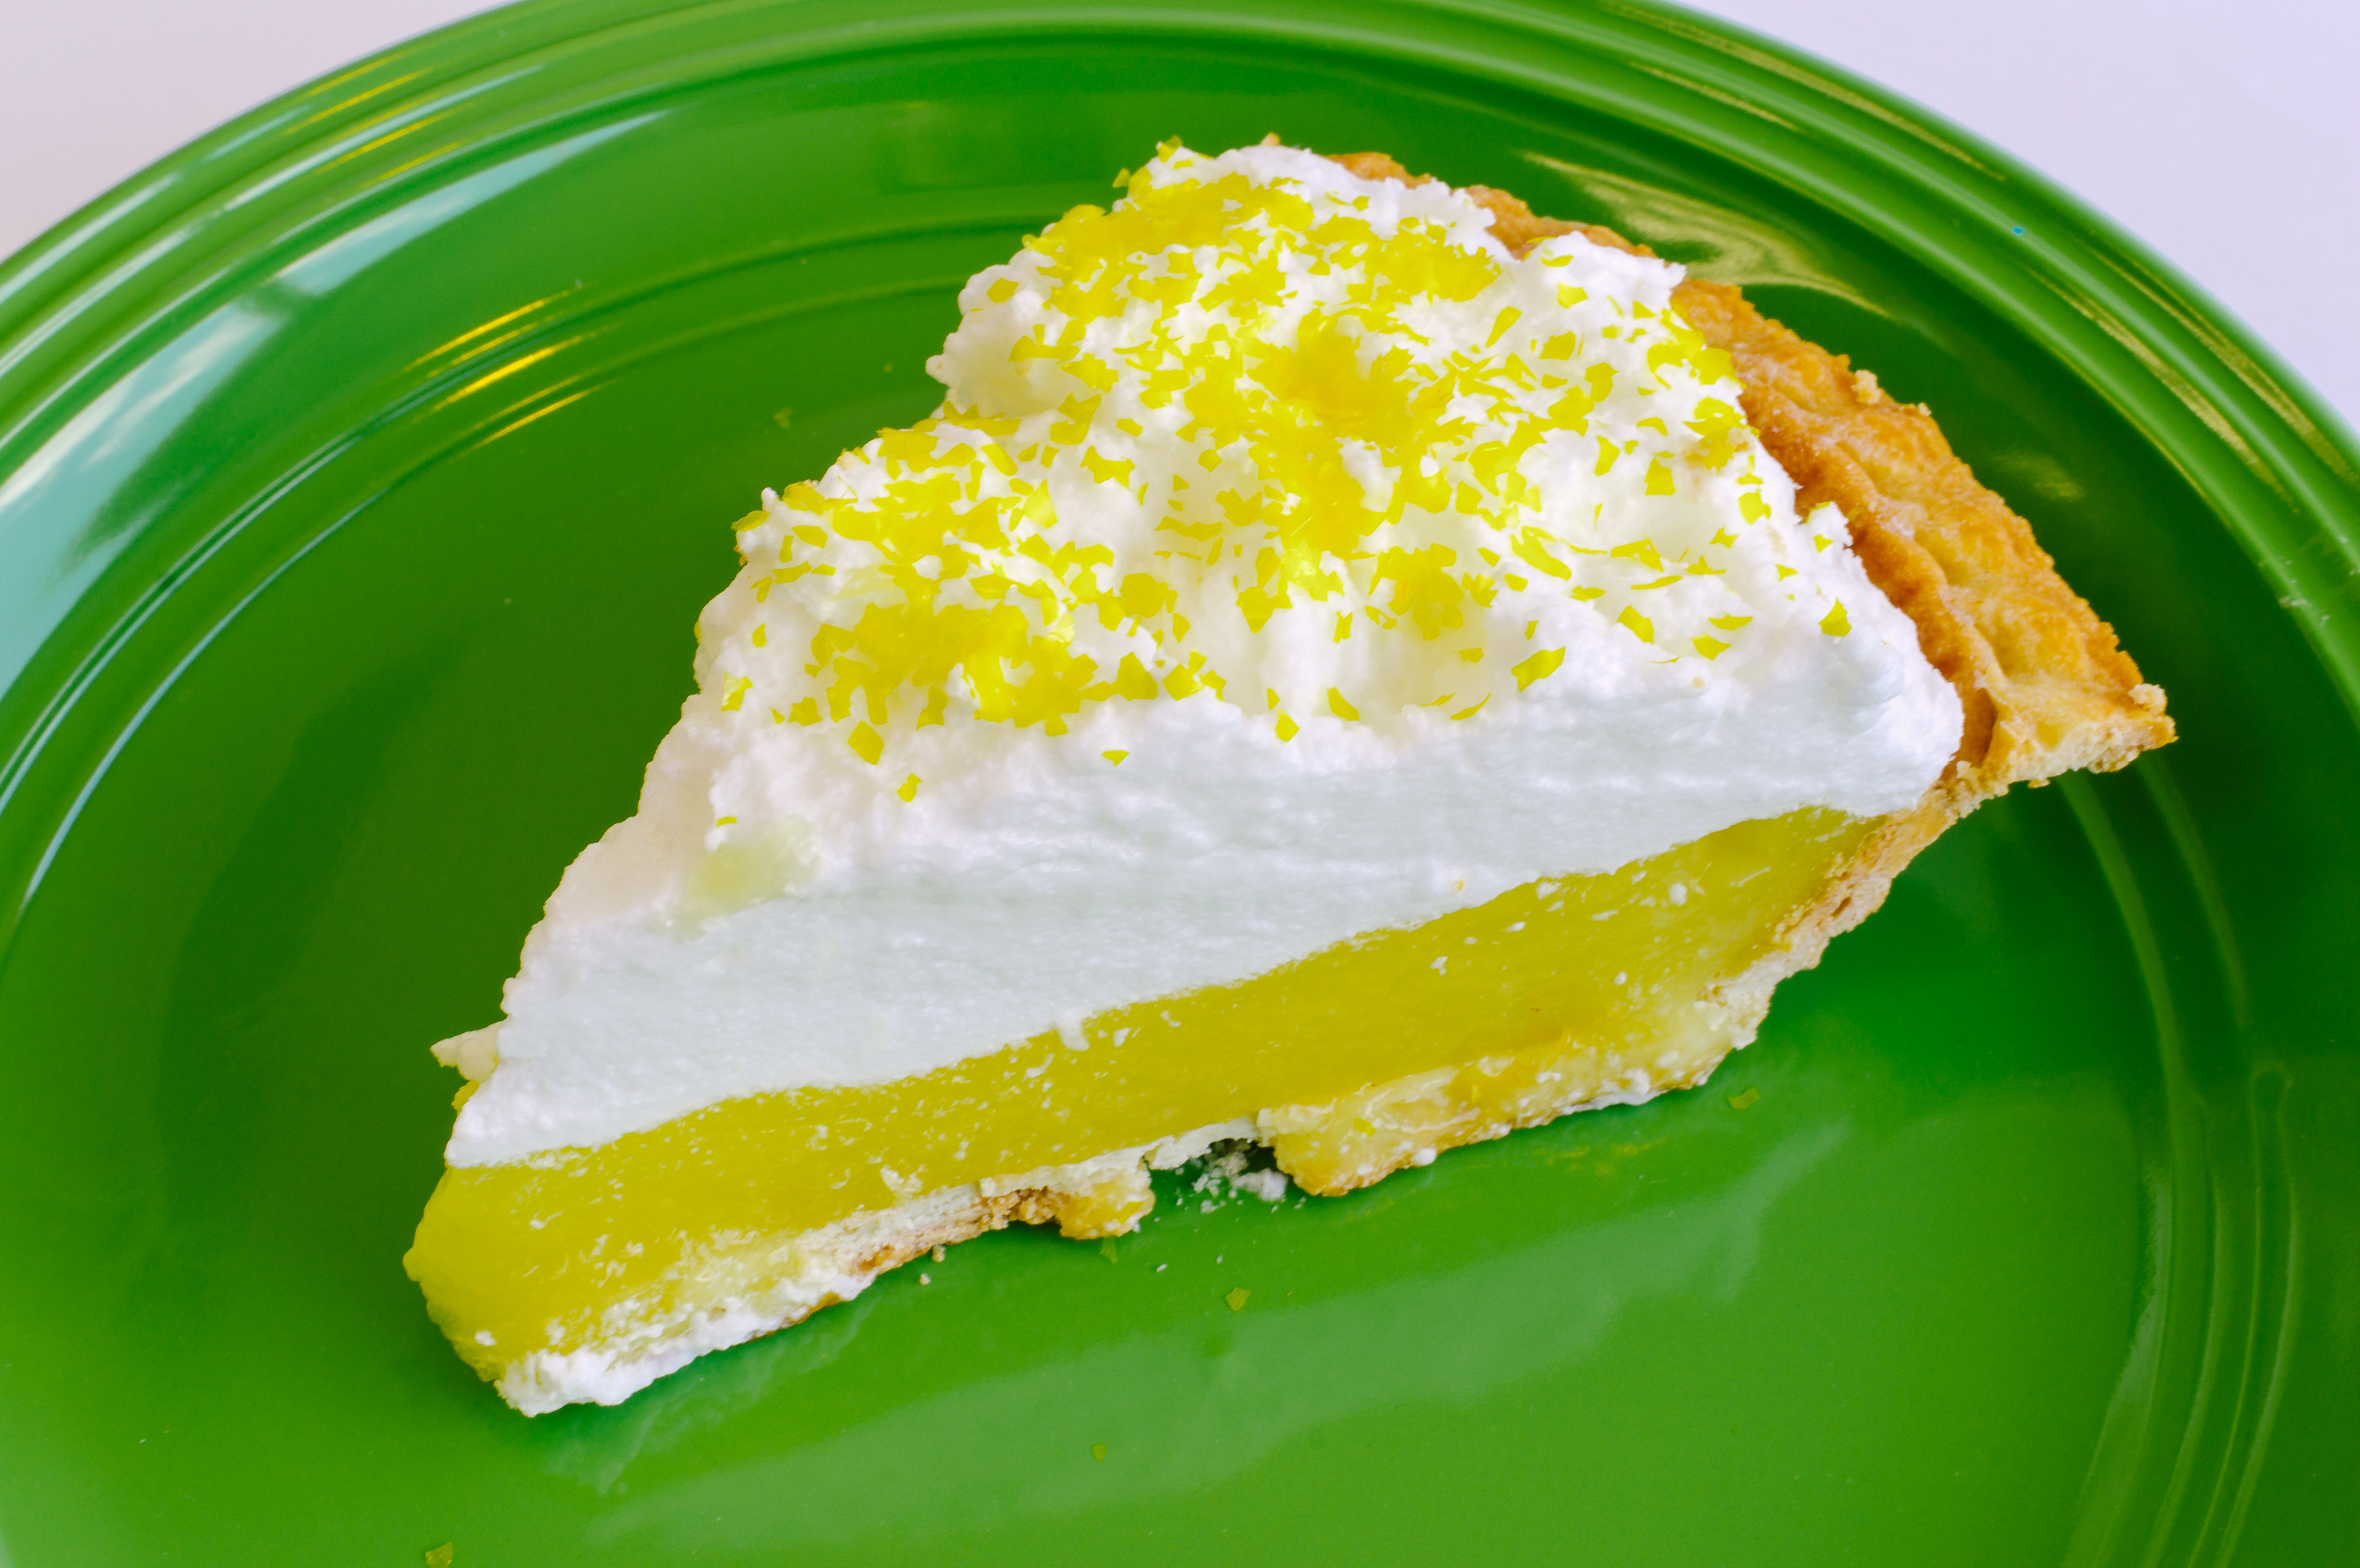 Lemon Edible Glitter on a pie